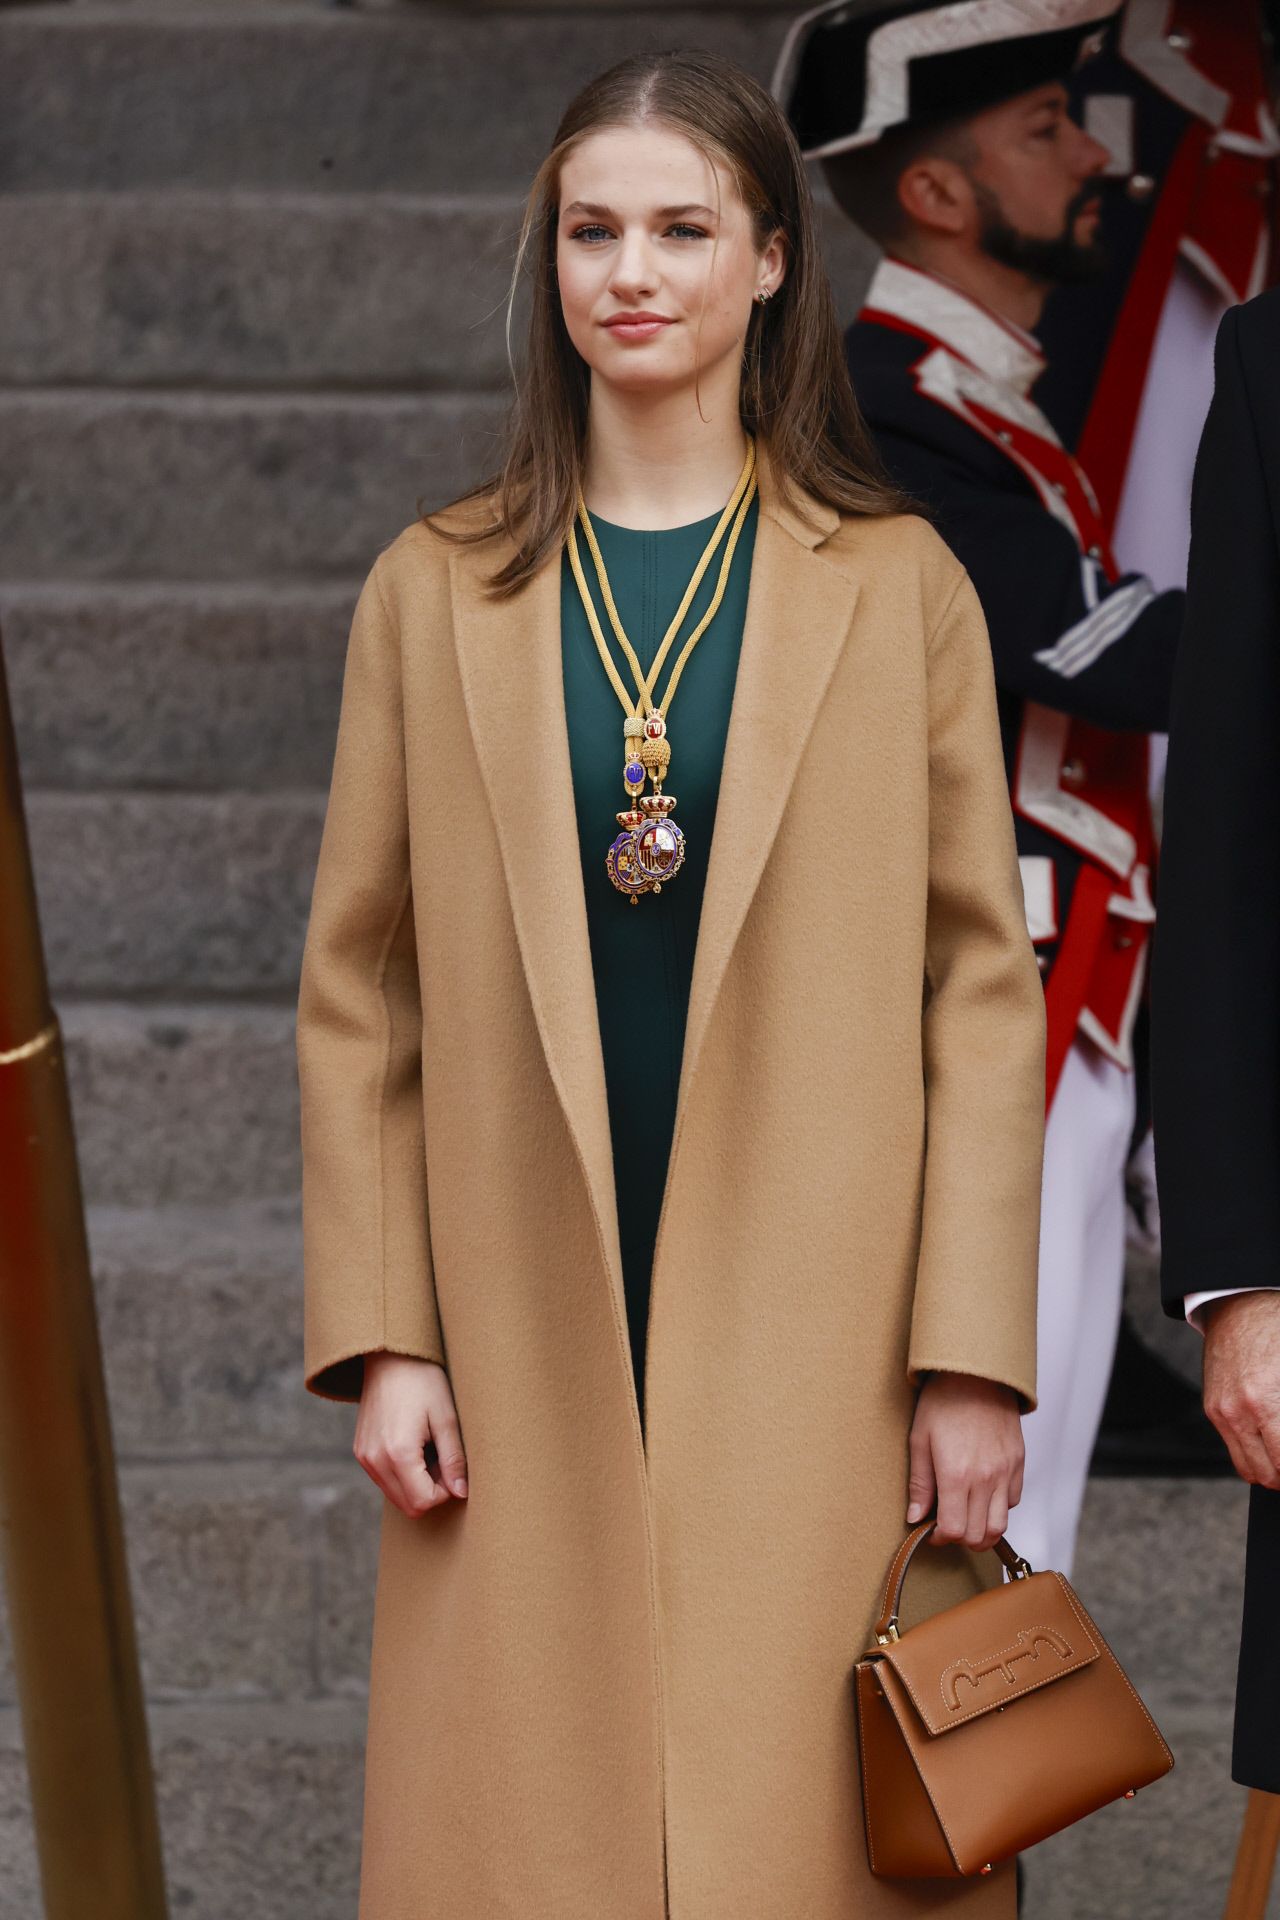 La princesa Leonor en el acto de apertura de la XV Legislatura.